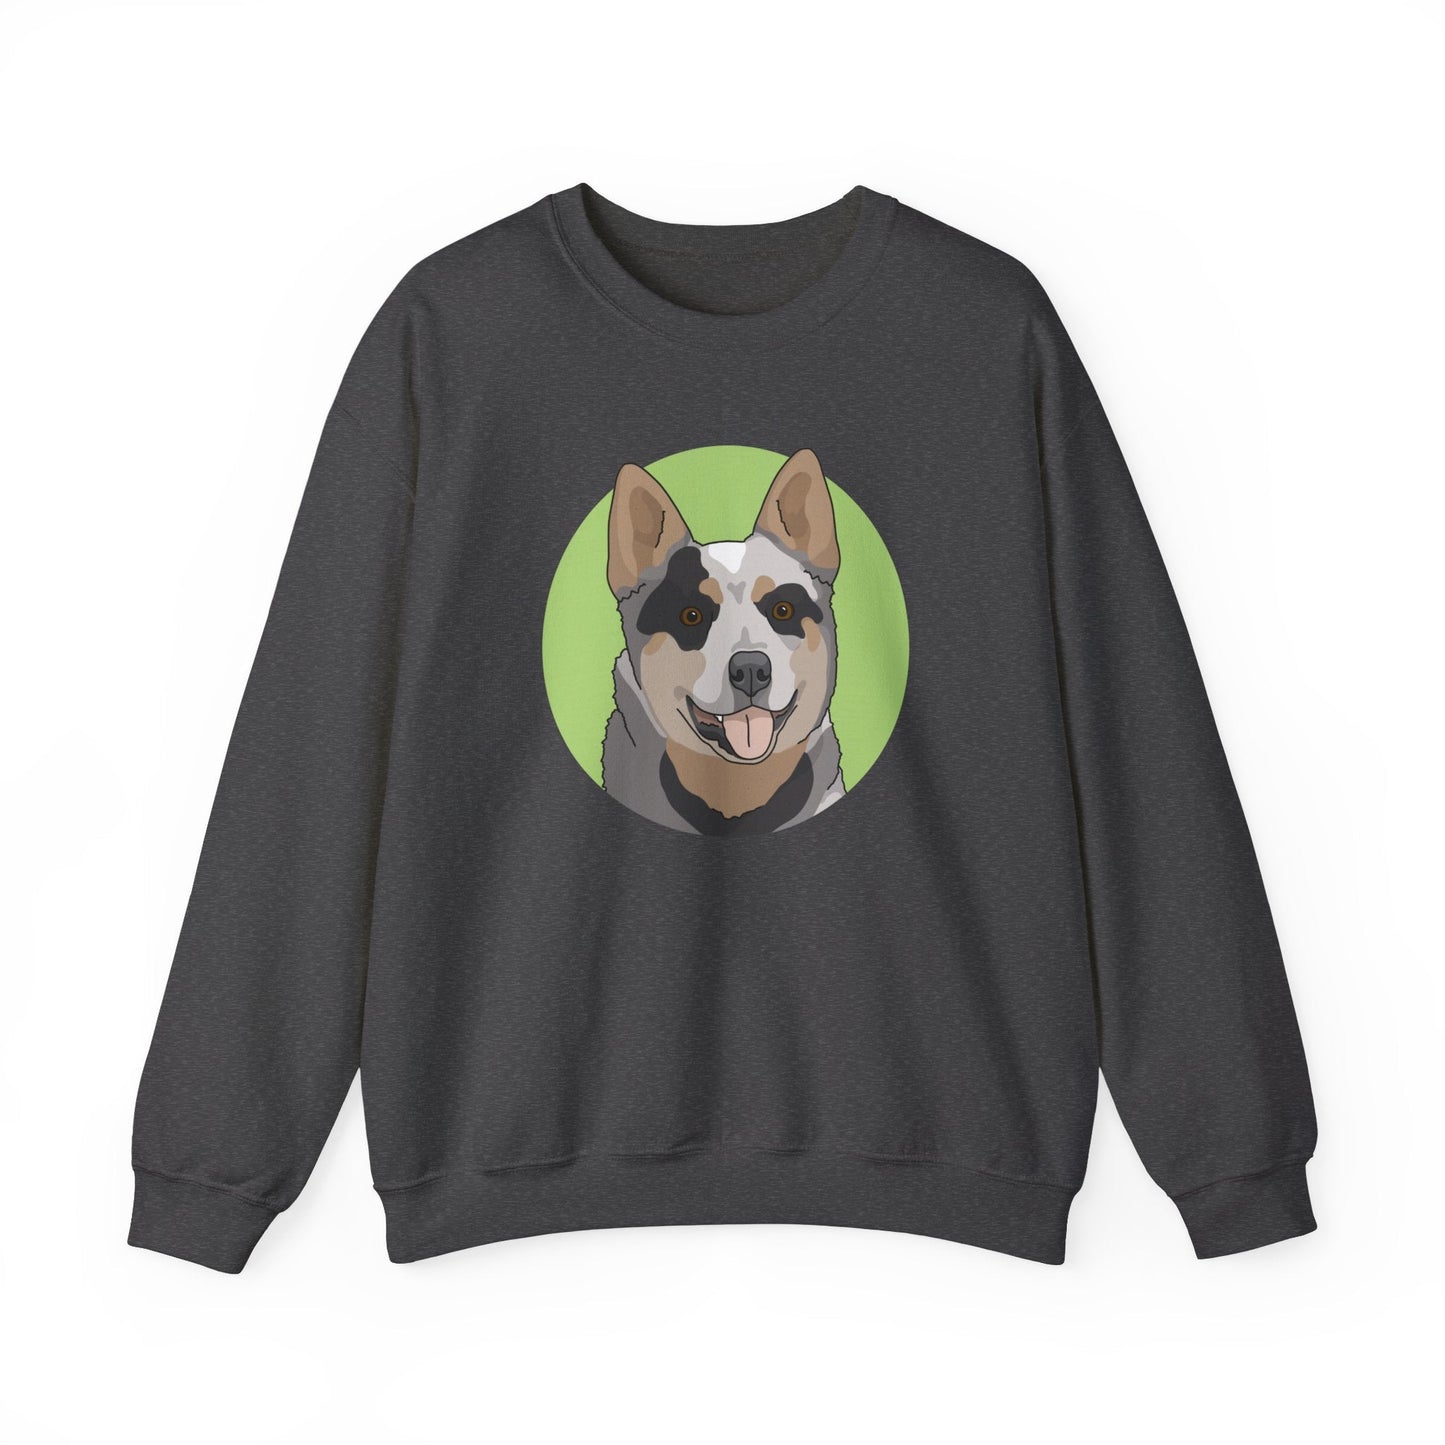 Australian Cattle Dog | Crewneck Sweatshirt - Detezi Designs-31145634737950471907